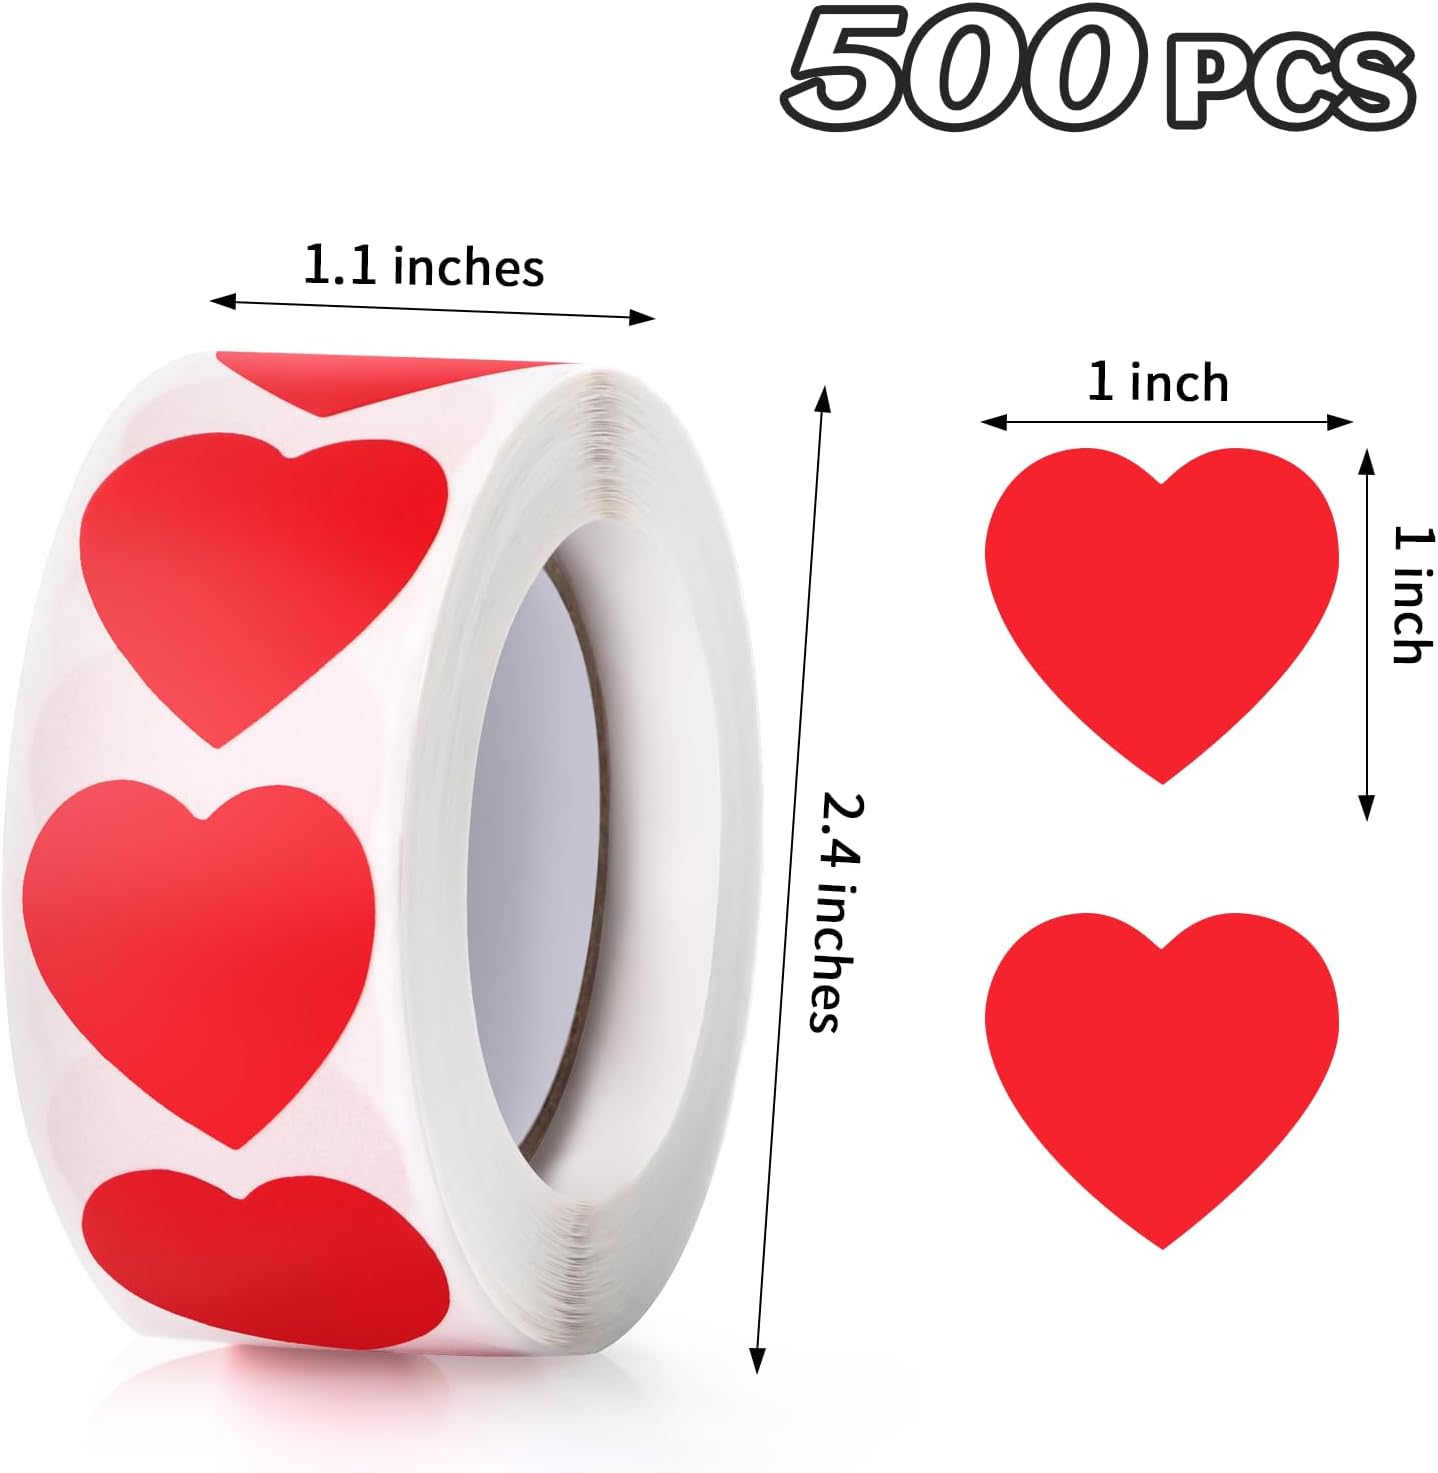 500Pcs Red Heart Stickers 1 inch - TTpen